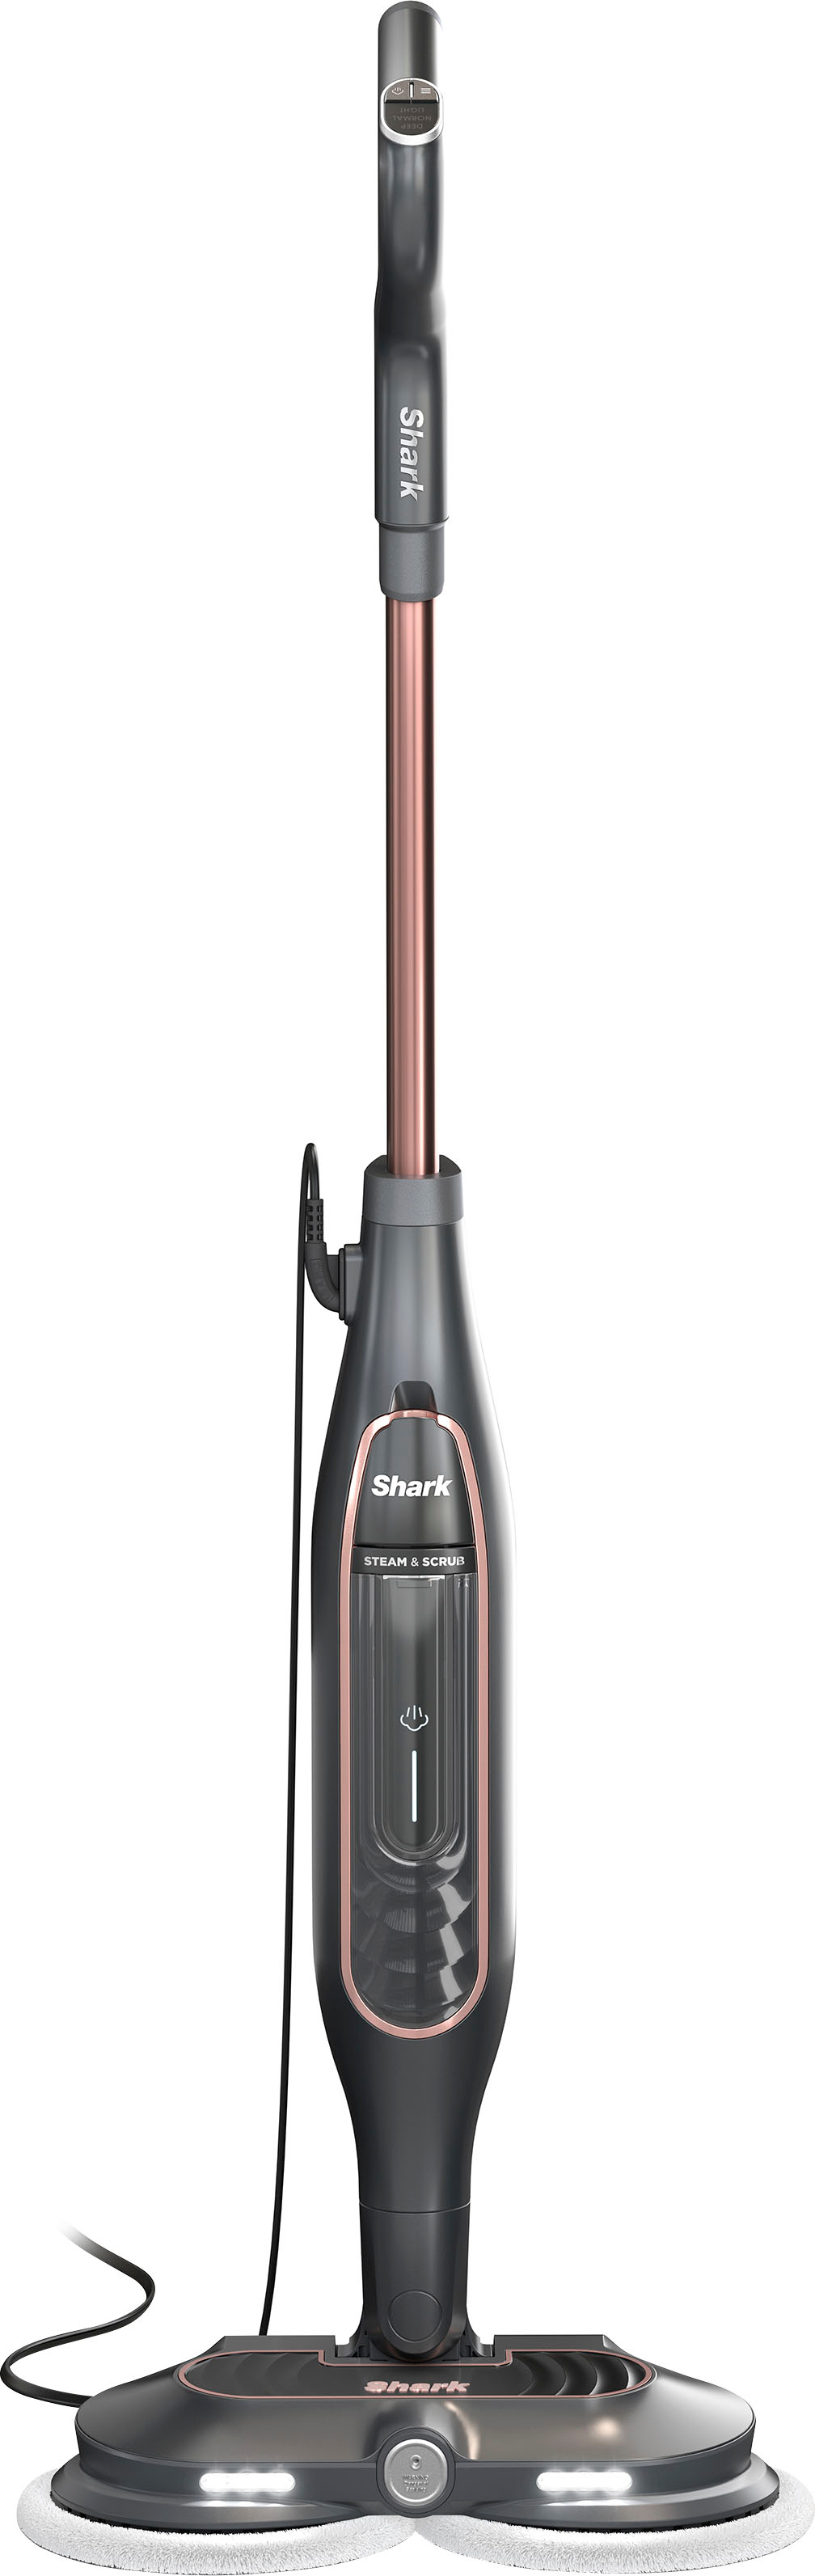 Shark Steam & Scrub with Steam Blaster Technology Hard Floor Steam Mop  Gray, Rose Gold S7201 - Best Buy